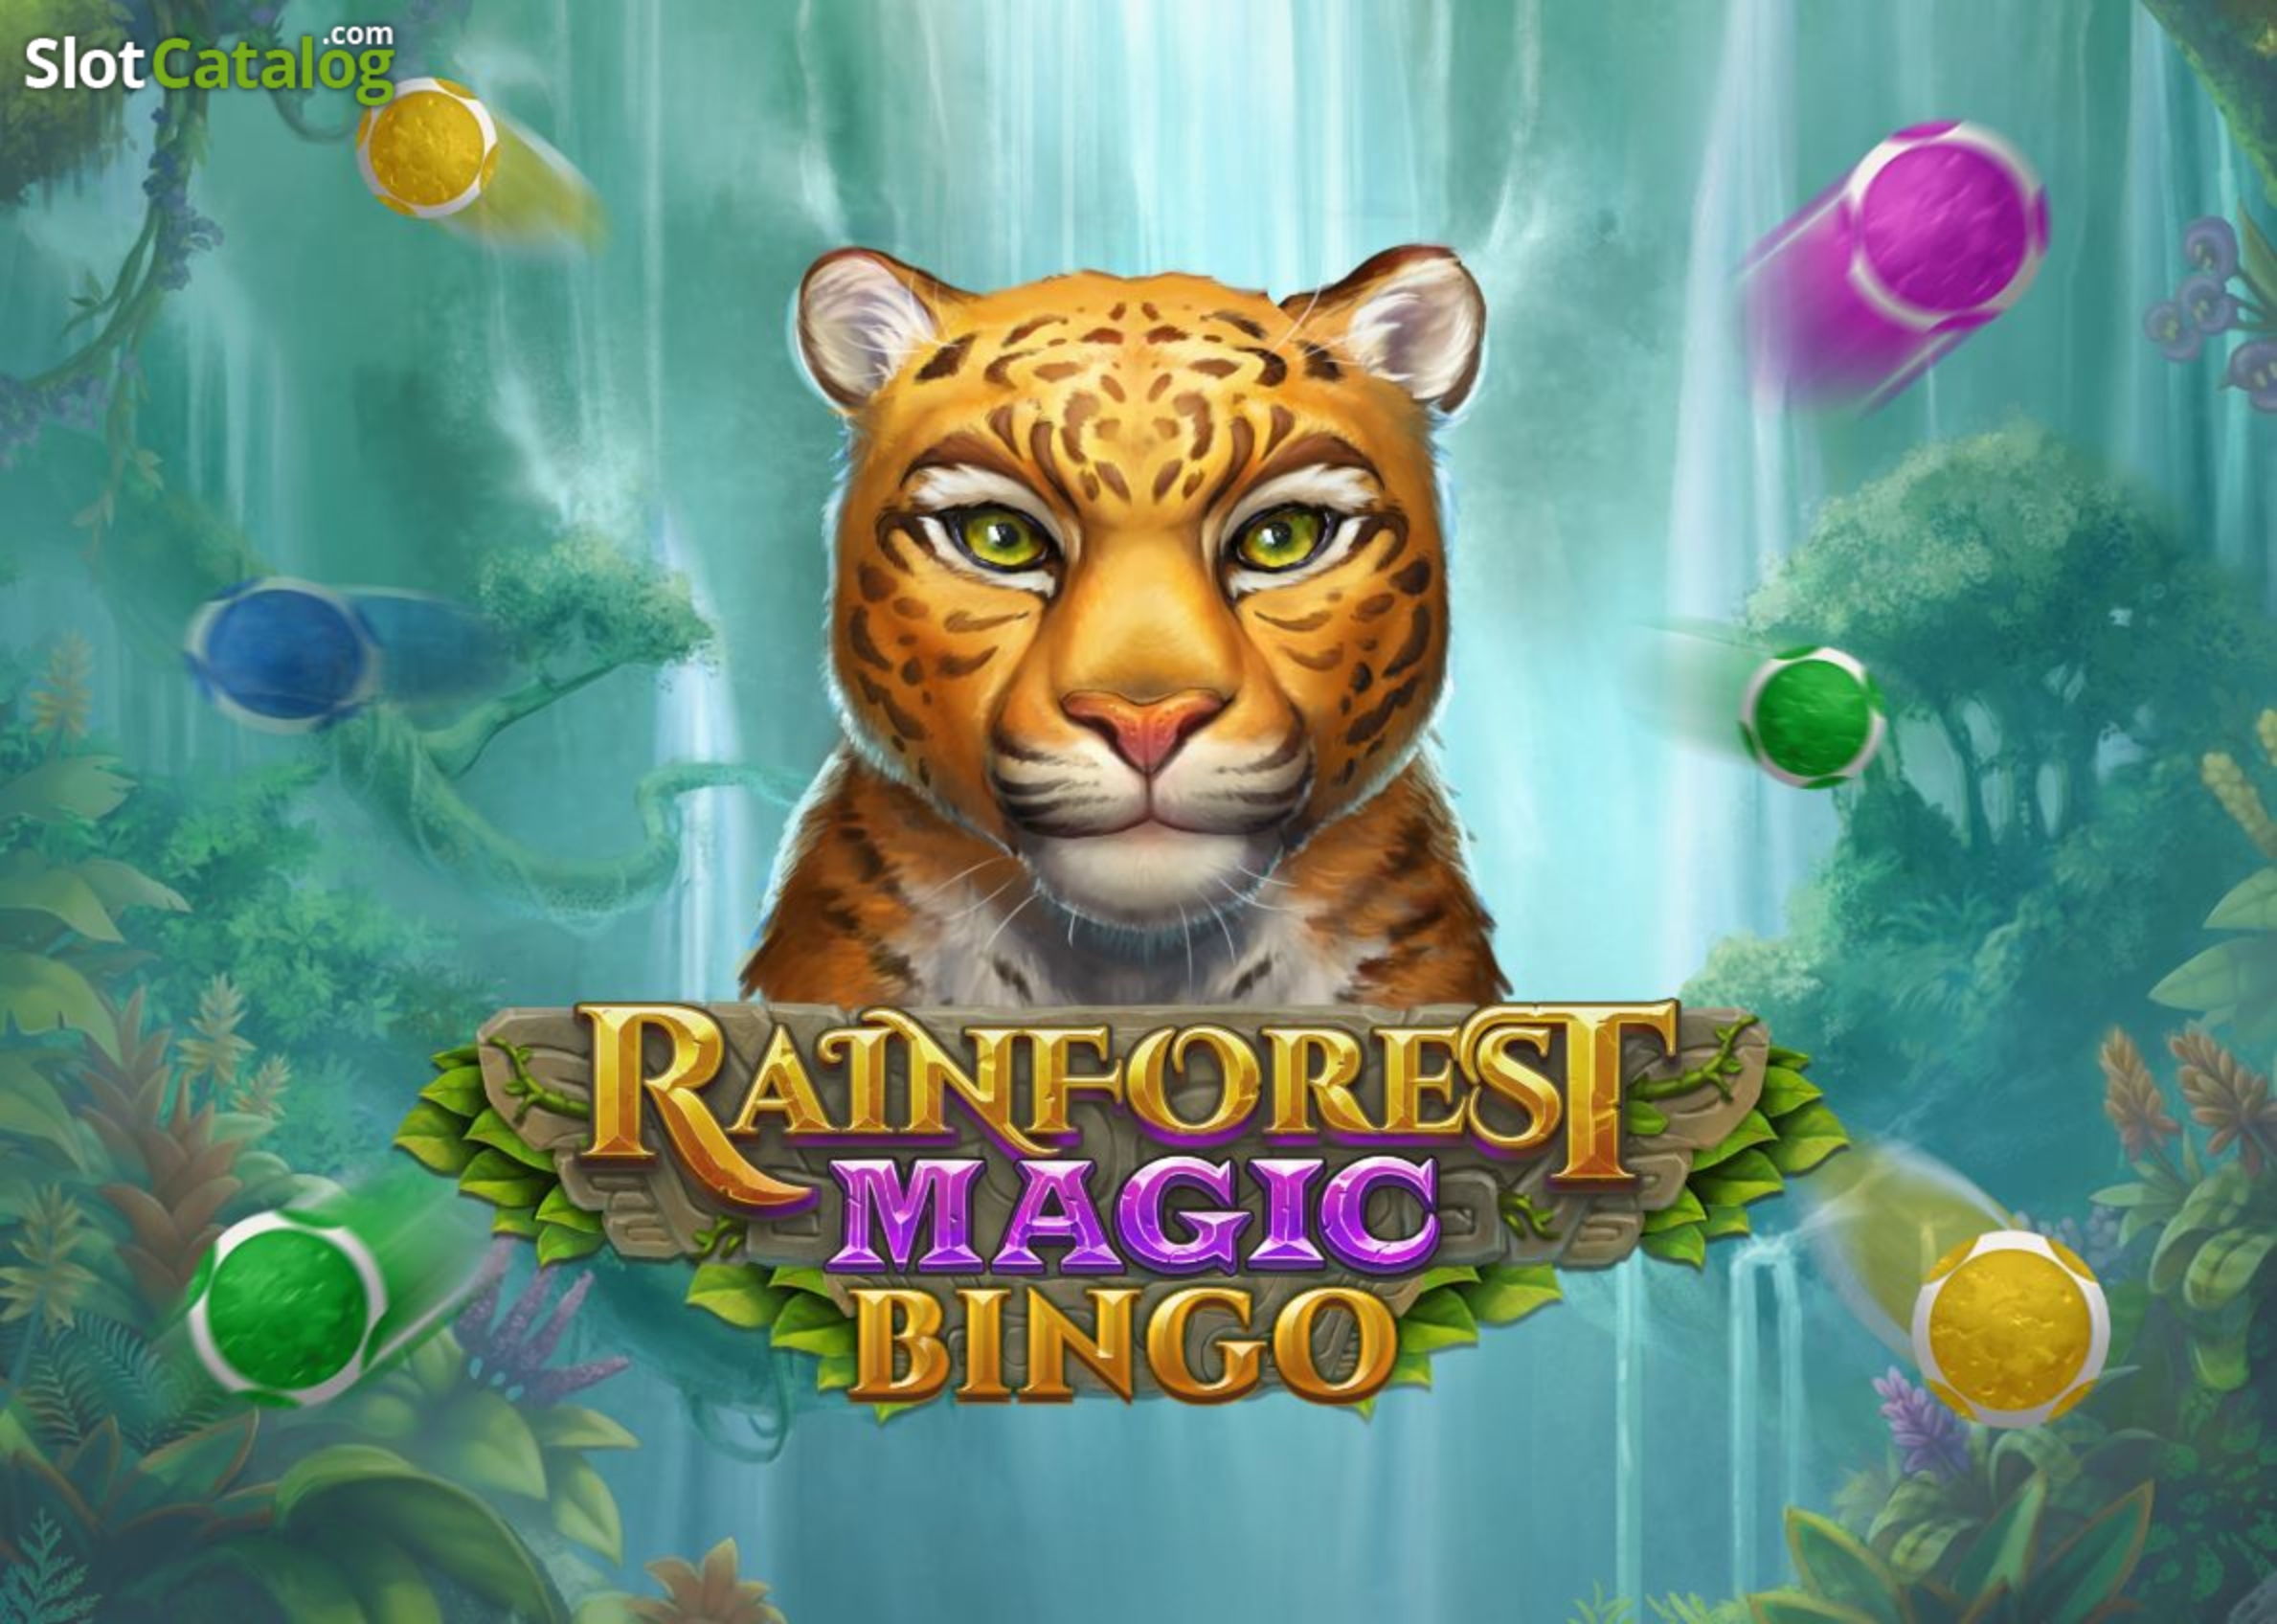 The Rainforest Magic Bingo Online Slot Demo Game by Playn GO